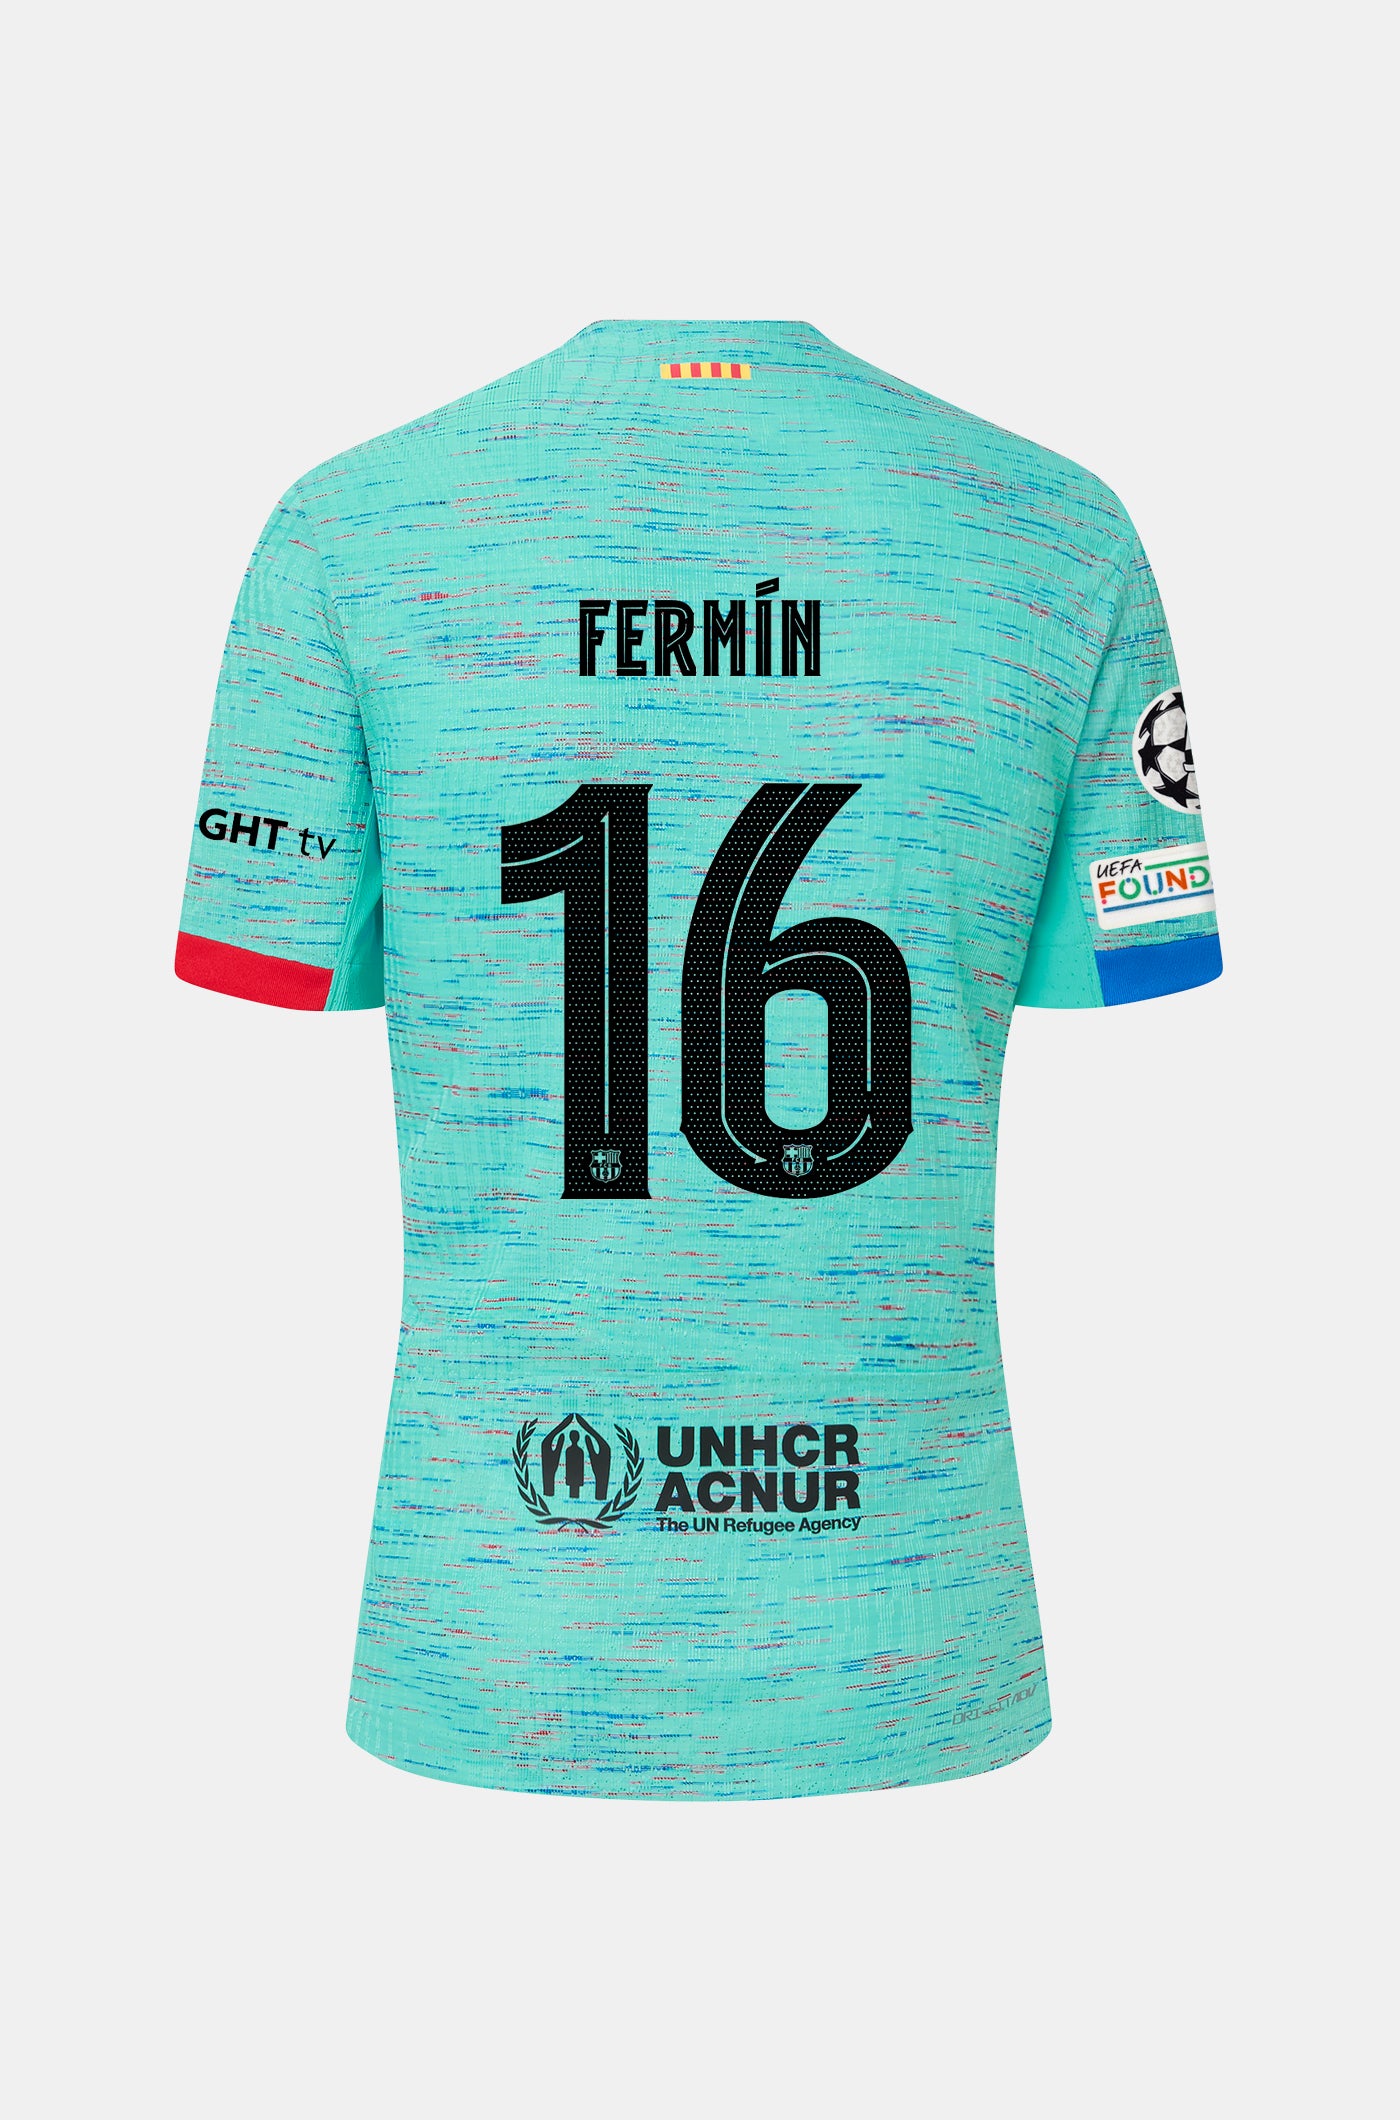 UCL FC Barcelona third shirt 23/24 Player’s Edition - FERMÍN